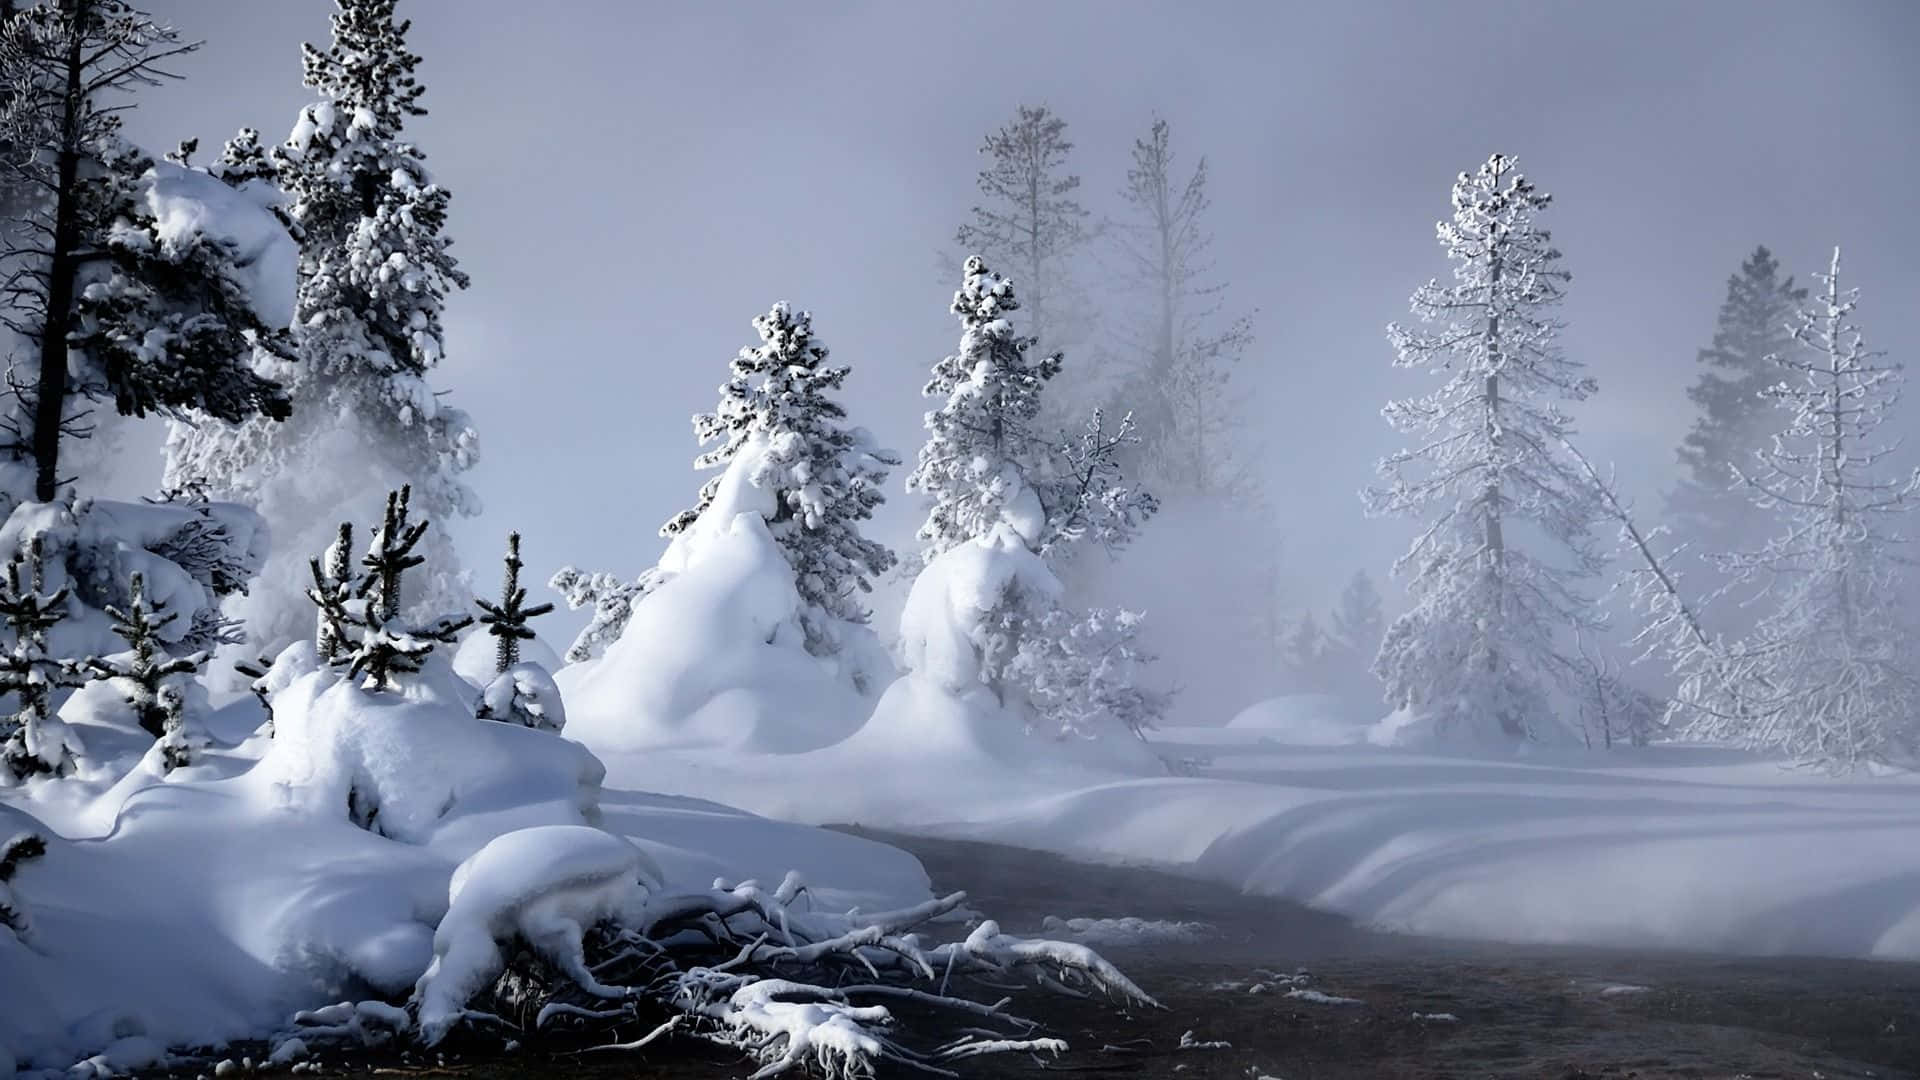 Enjoy the beautiful winter scene in the snow